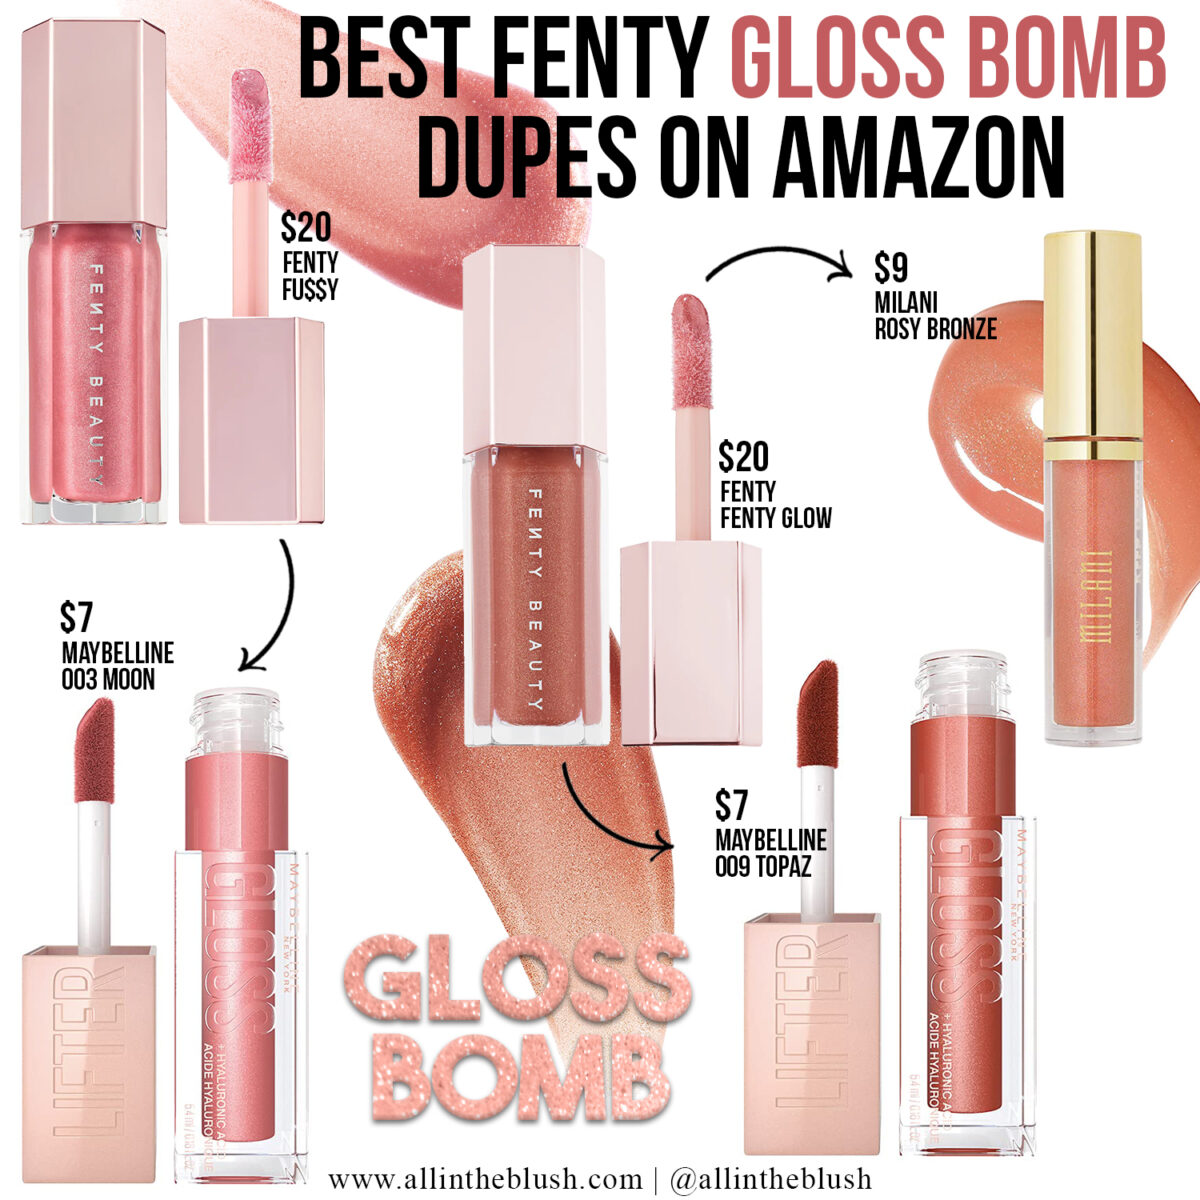 Best Fenty Gloss Bomb Dupes Available on Amazon